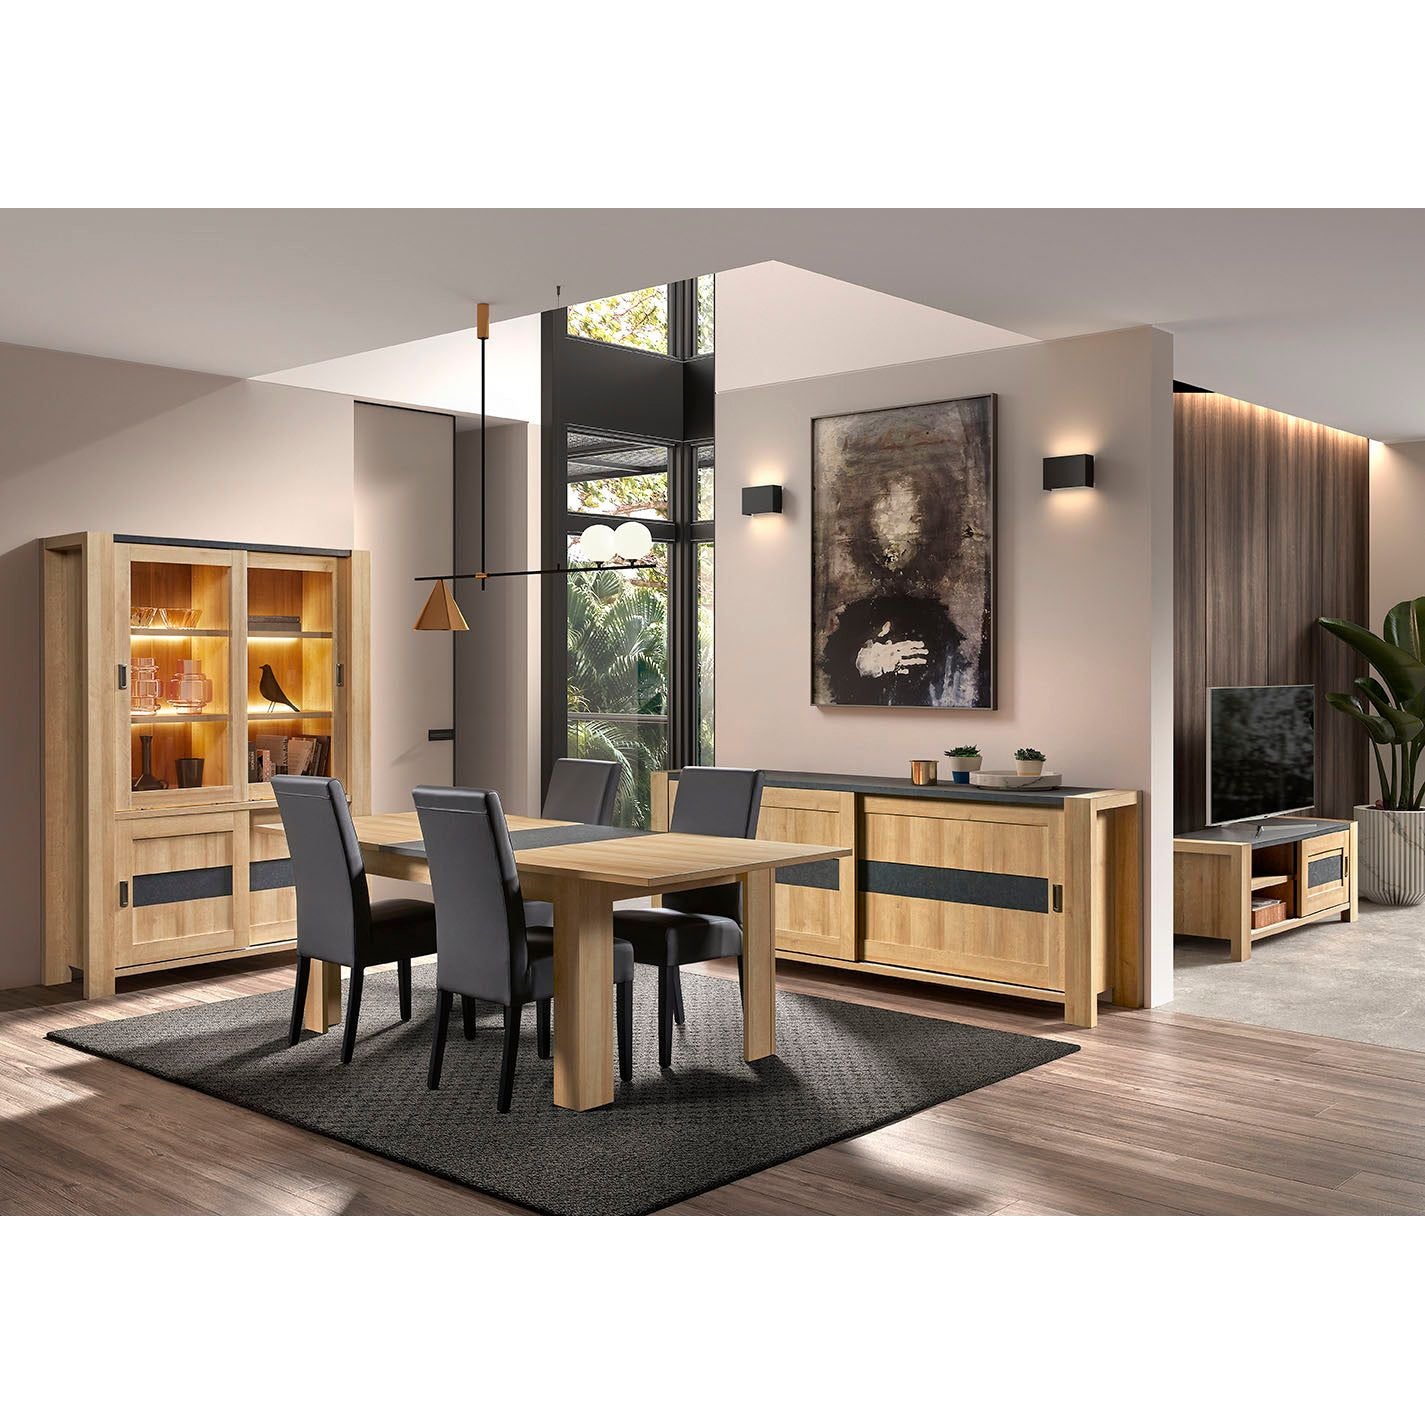 Display cabinet | Furniture series Costas | Anthracite, natural | 141